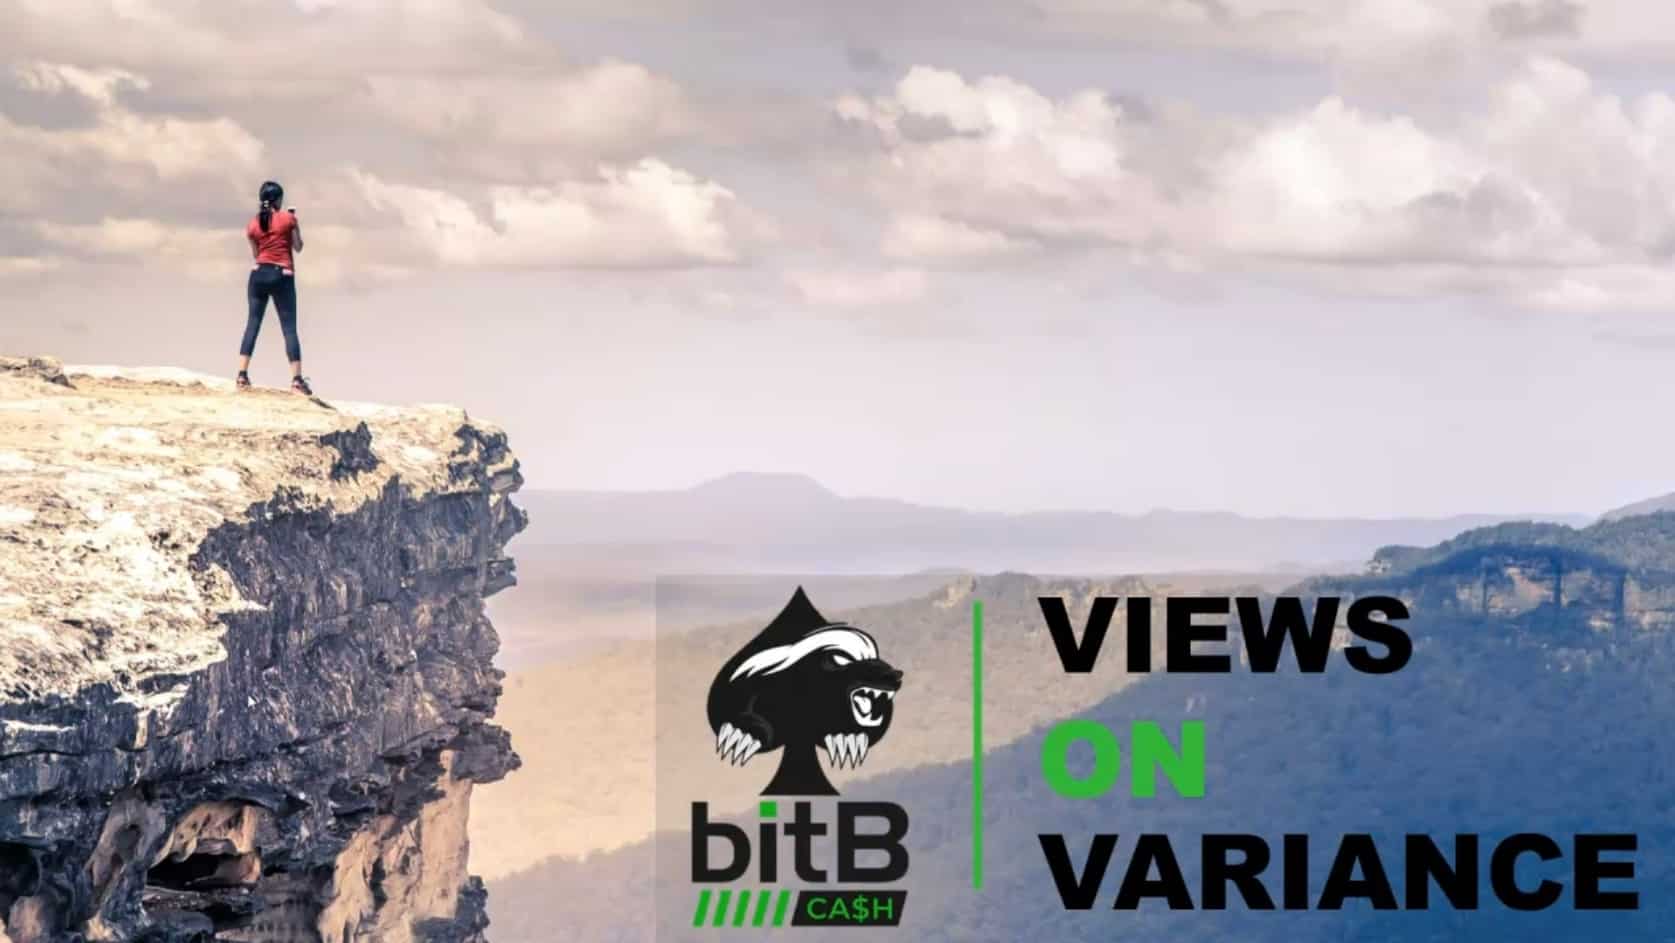 Views on Variance